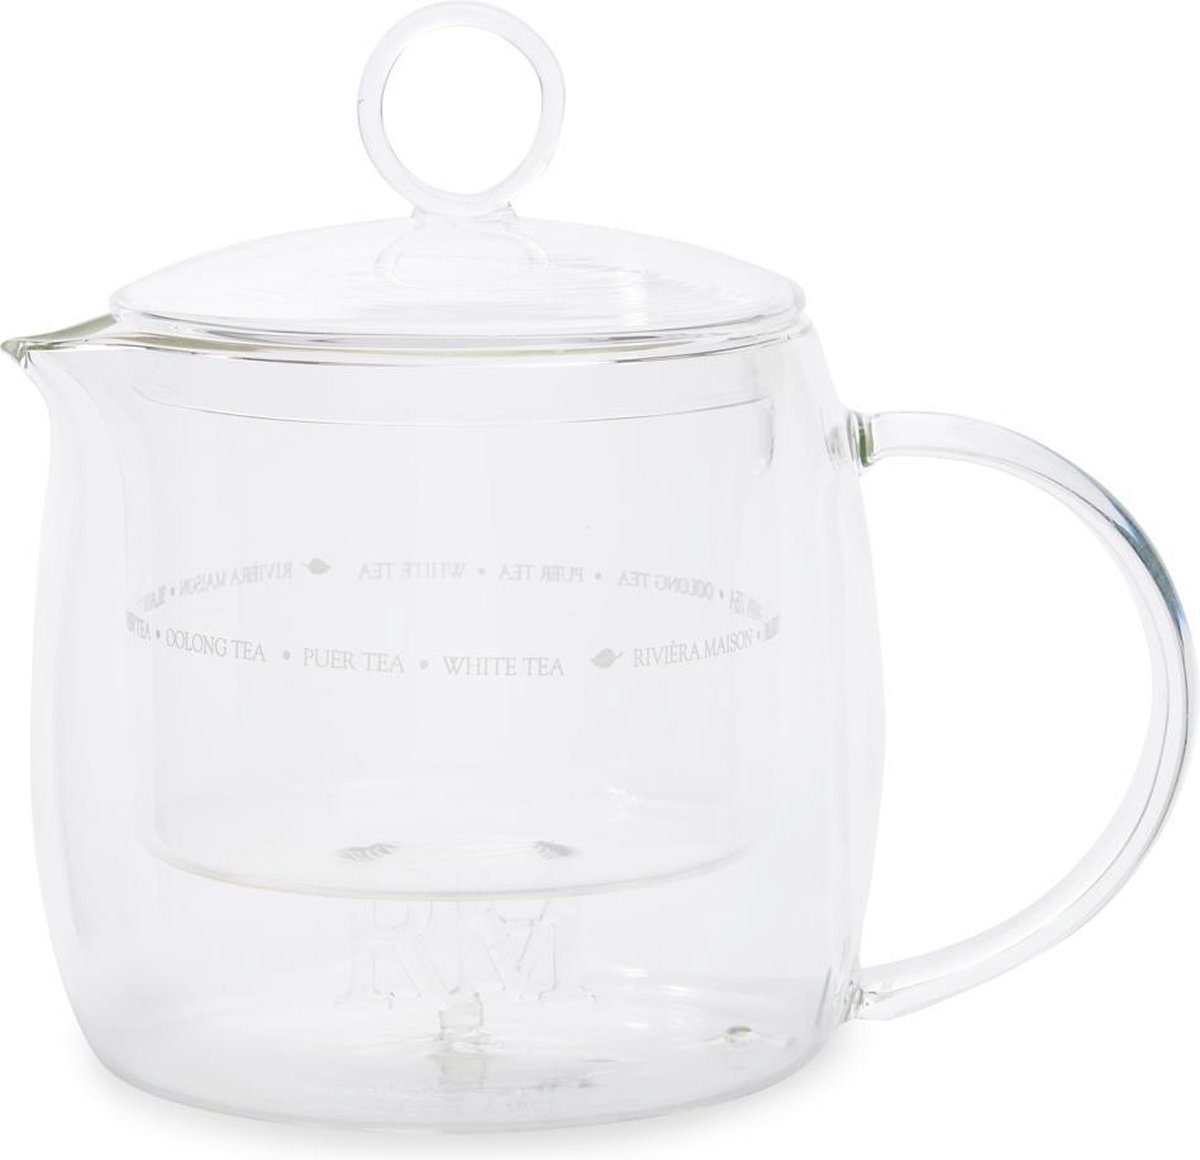 Riviera Maison Theepot 1 Liter - RM 48 Tea Pot - Transparant - Riviera Maison